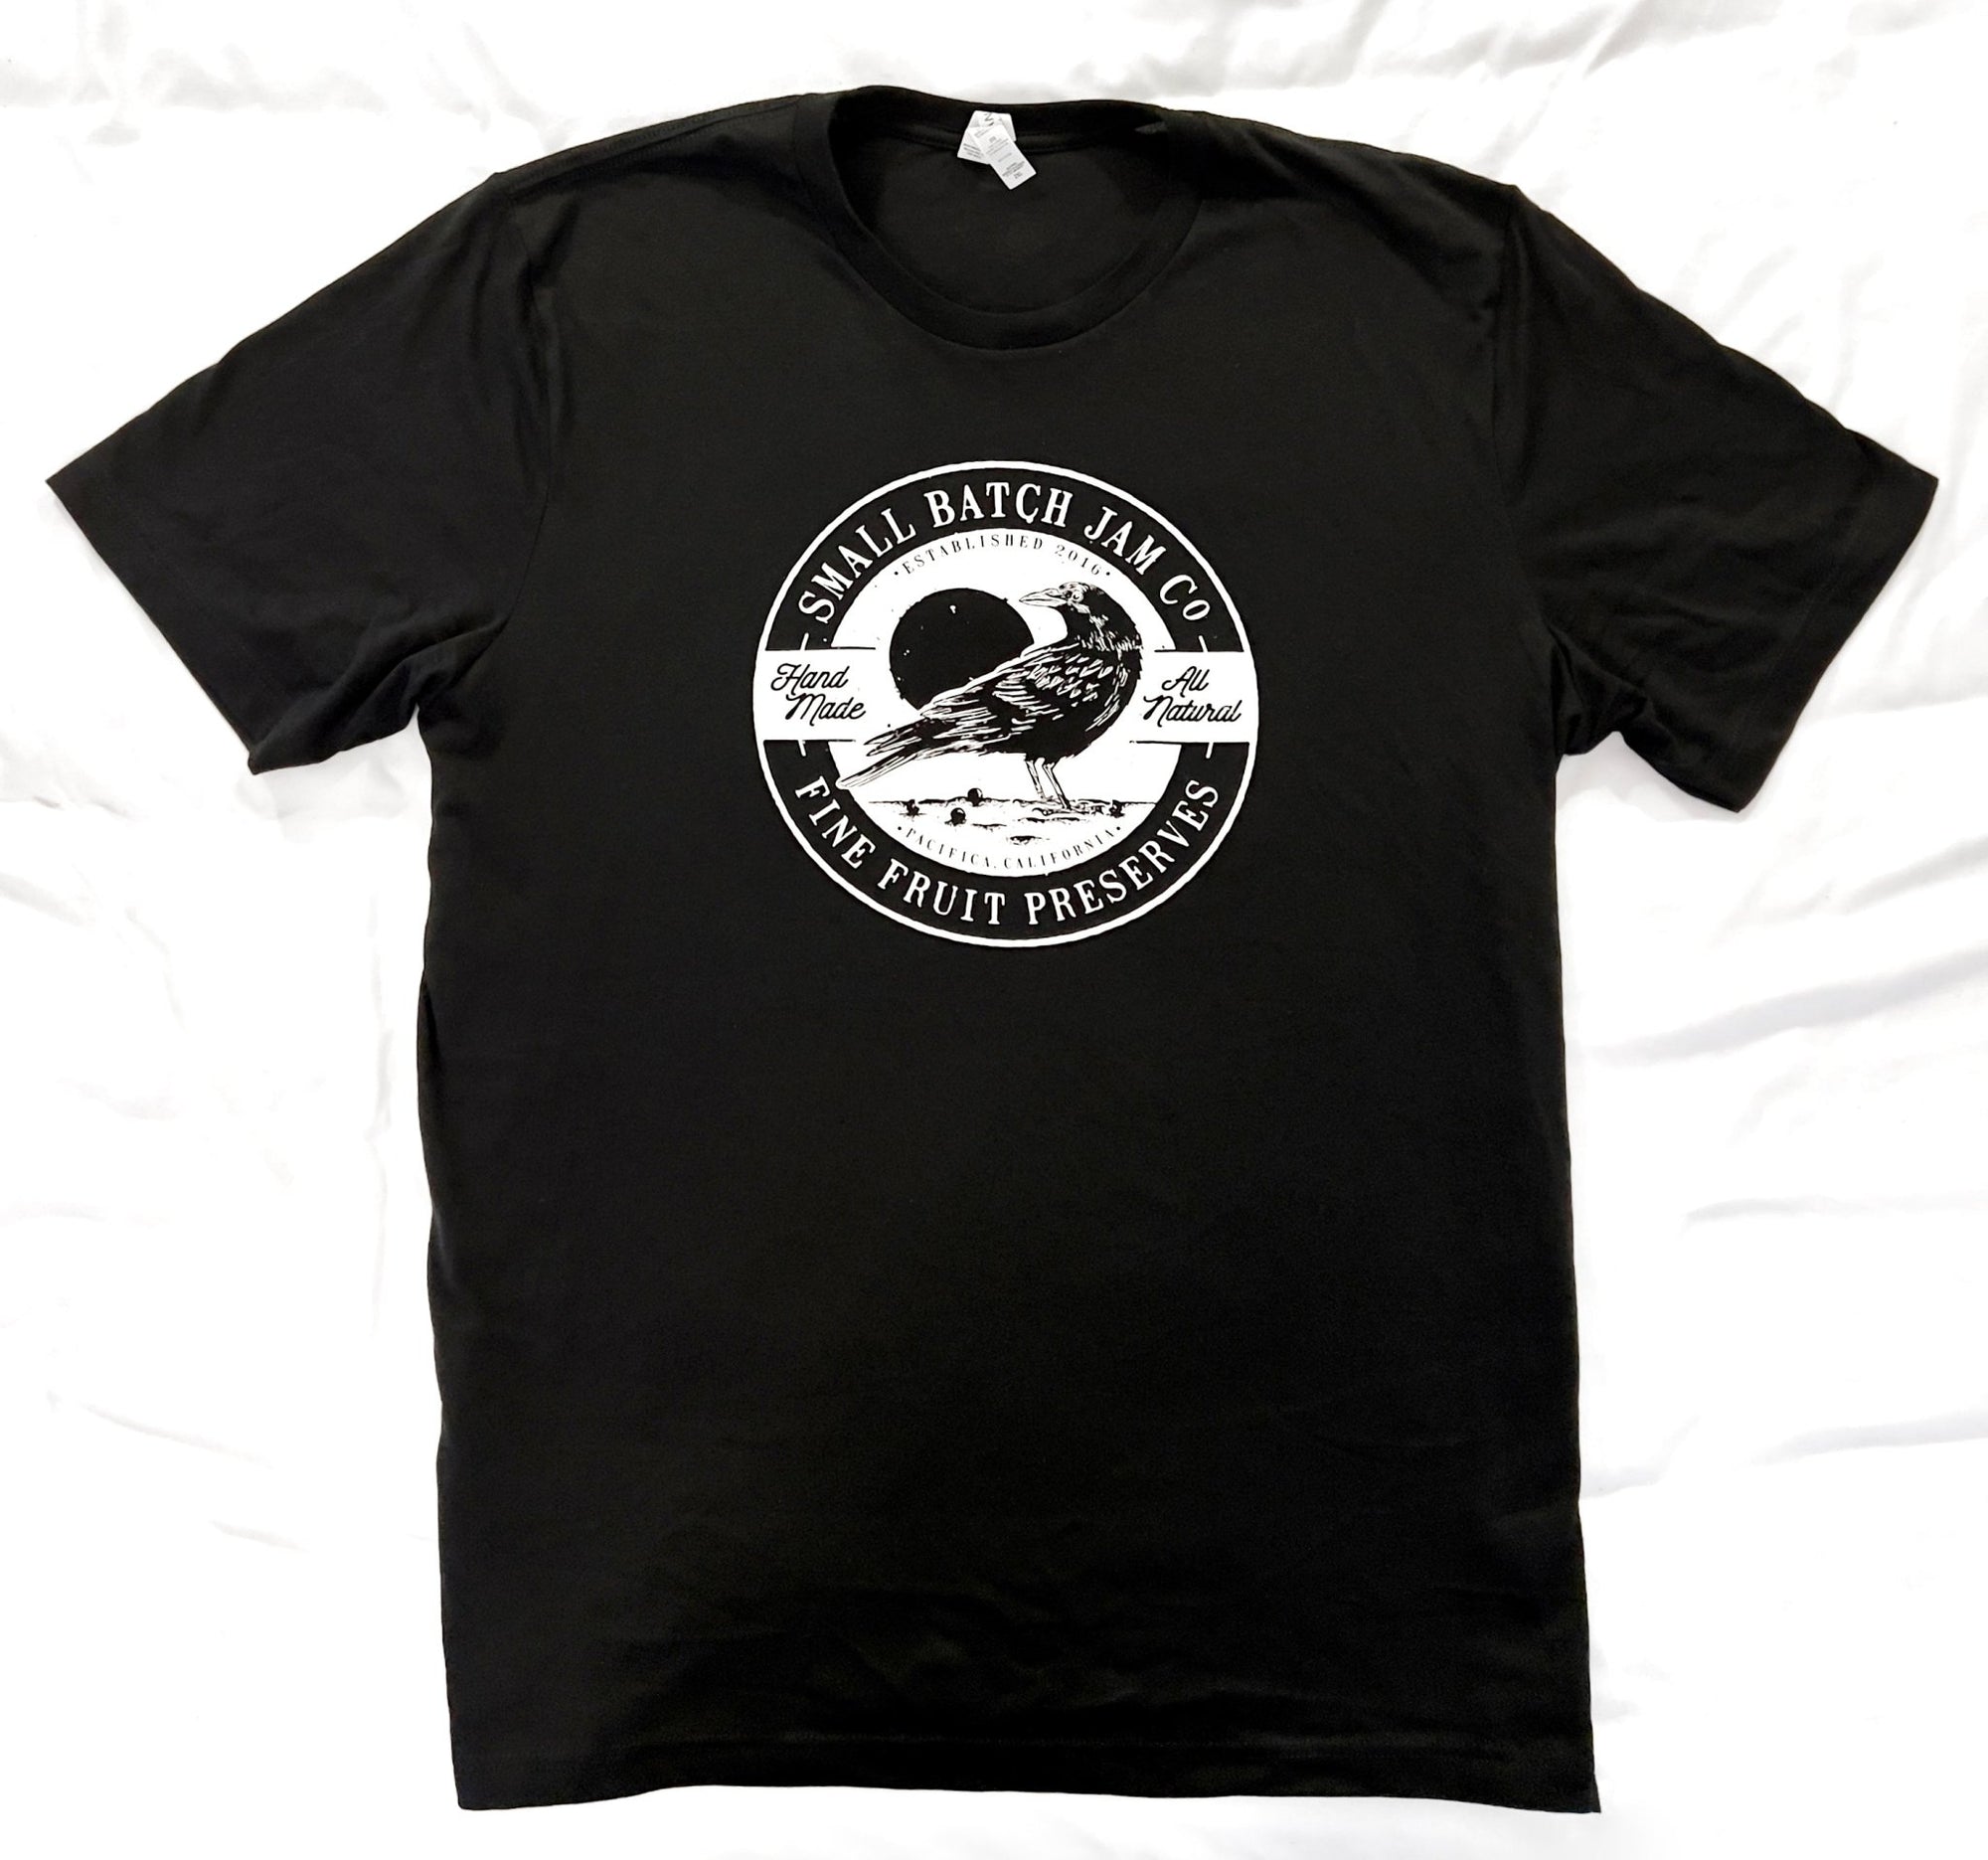 SBJC Black Logo T-Shirt - Small Batch Jam Co